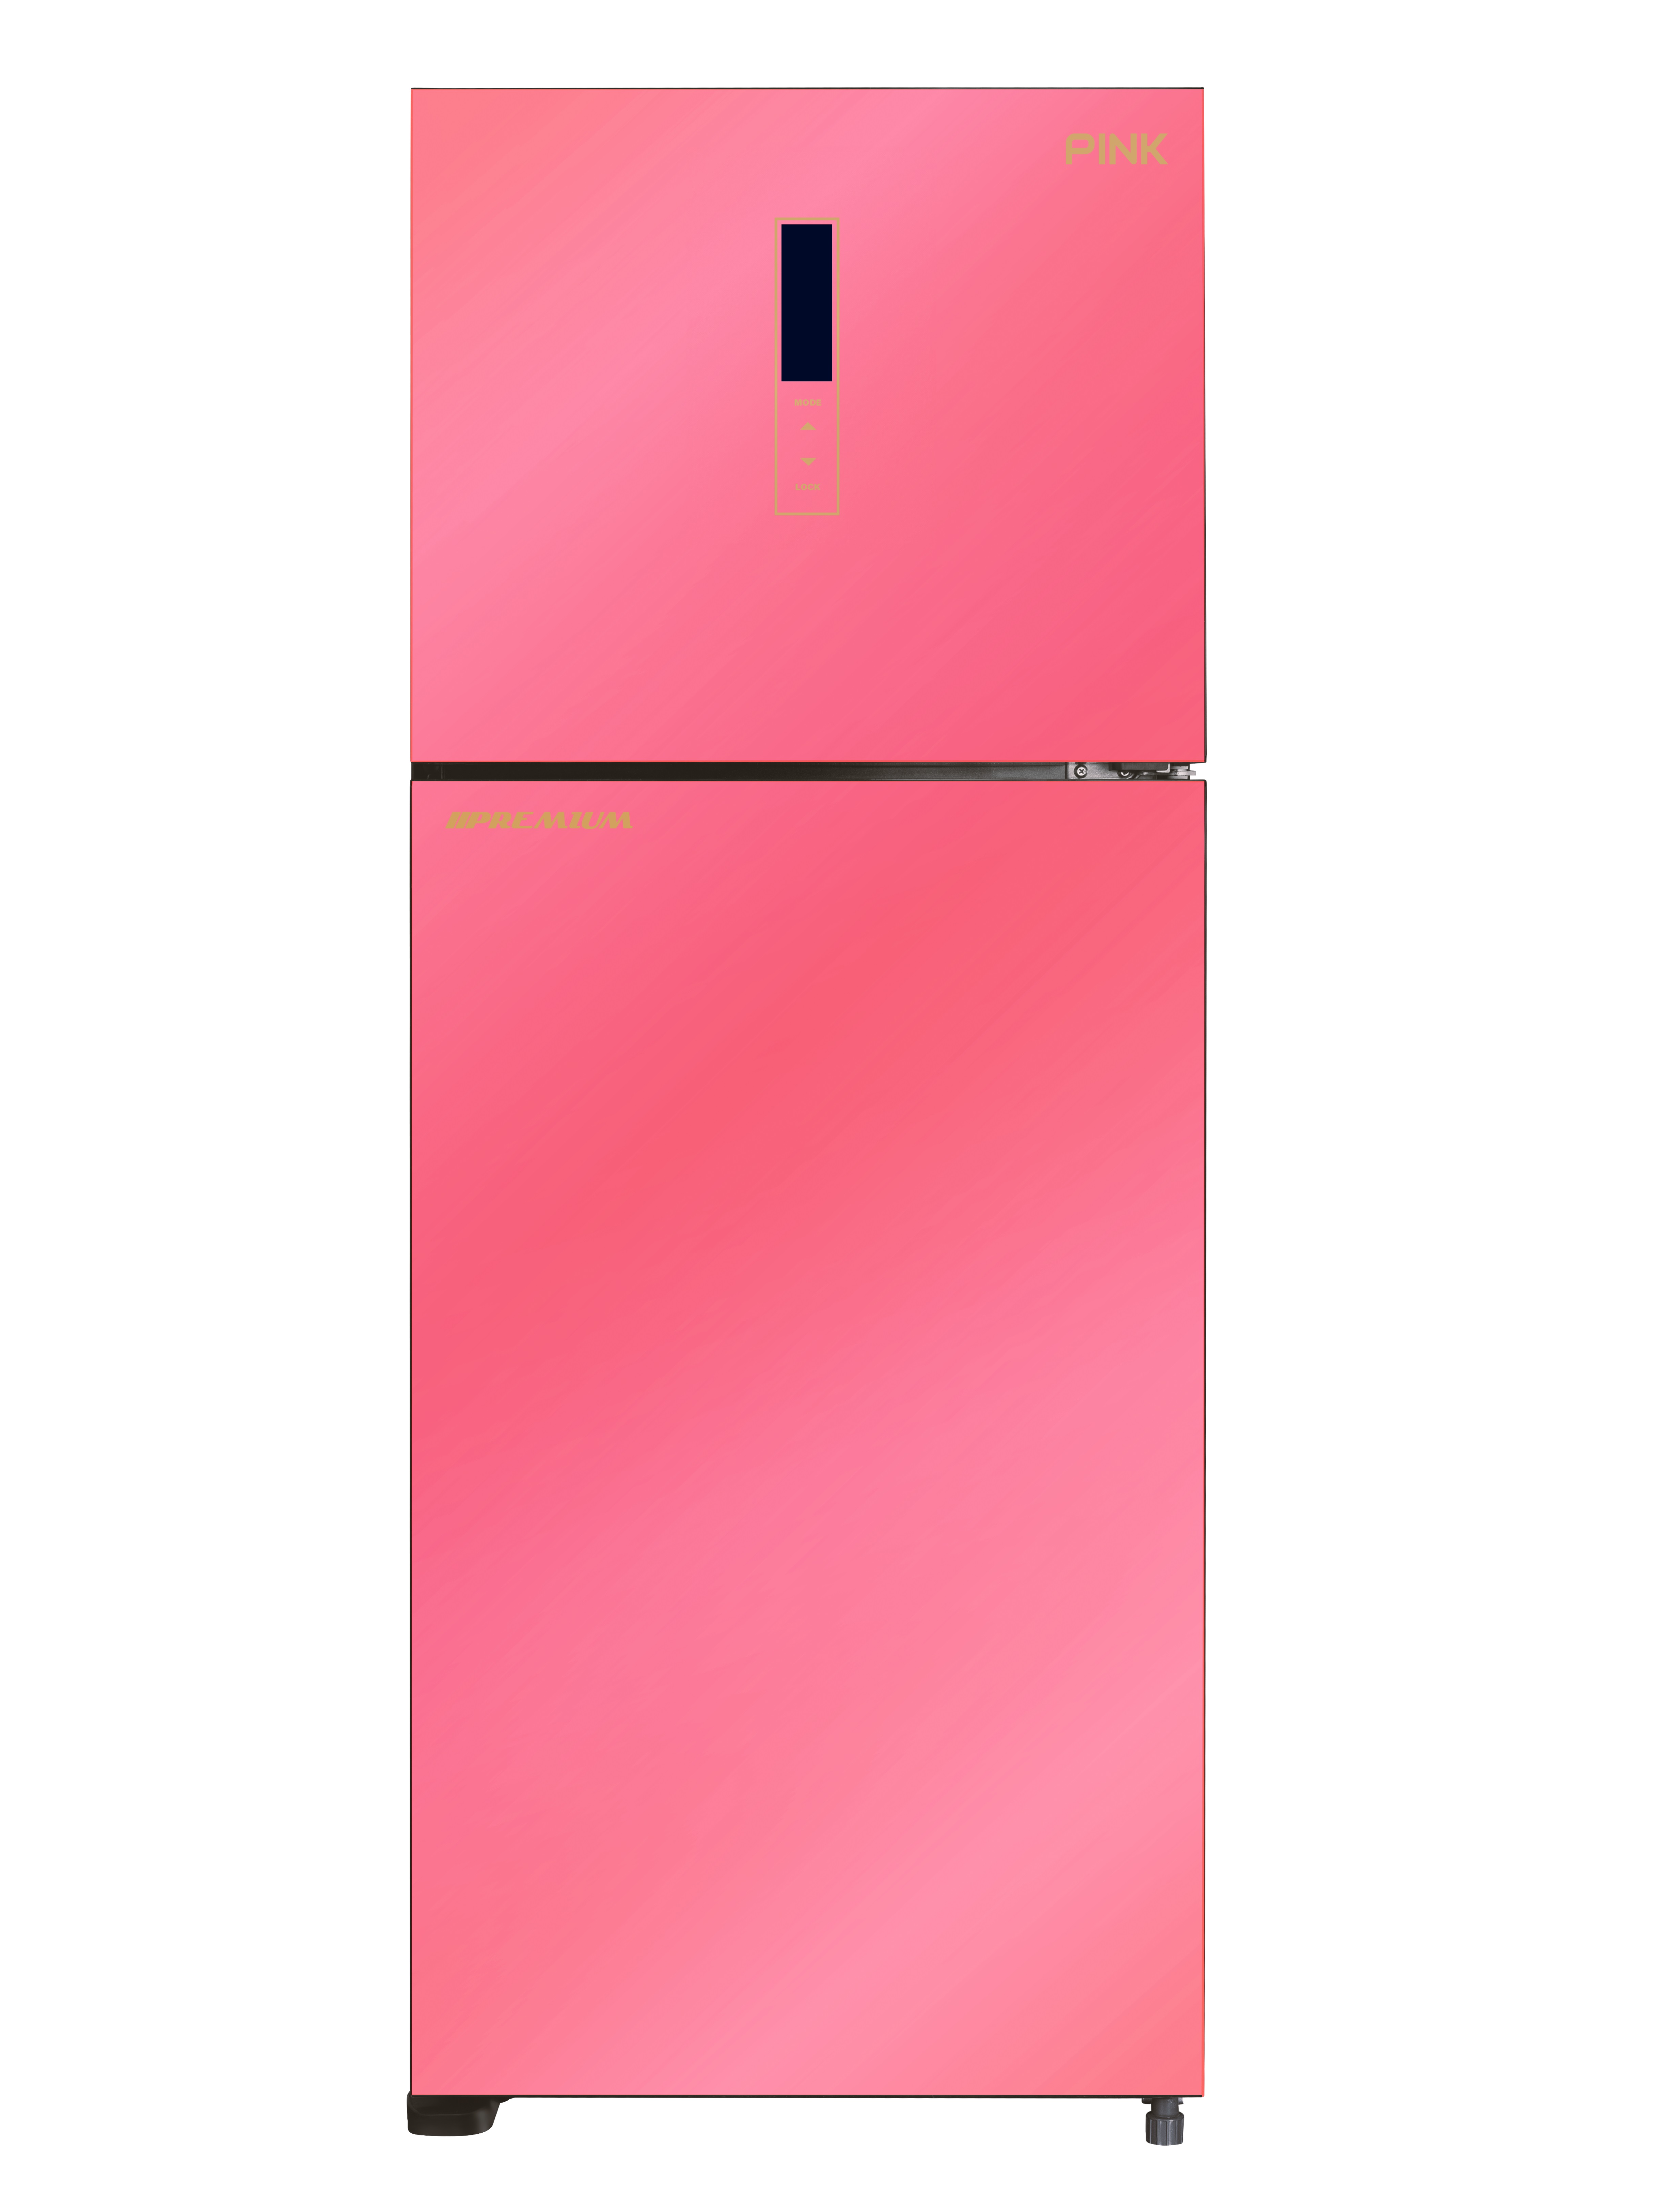 Premium No Frost Top Freezer Refrigerator, 420 Liters, 16 Feet, Pink - N500LBG130AD